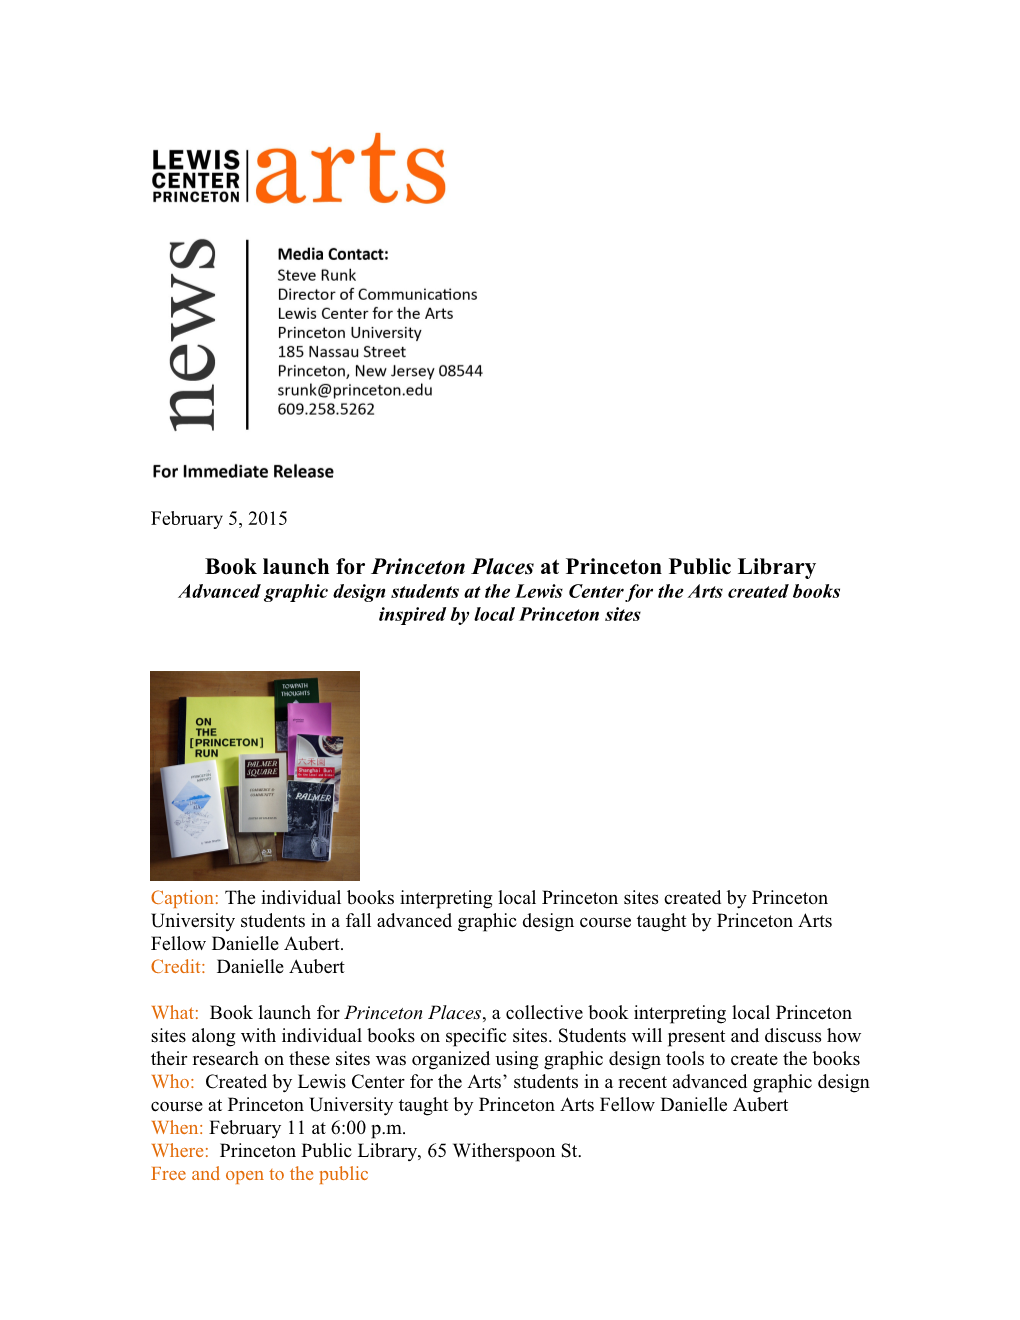 Book Launch for Princeton Placesat Princeton Public Library